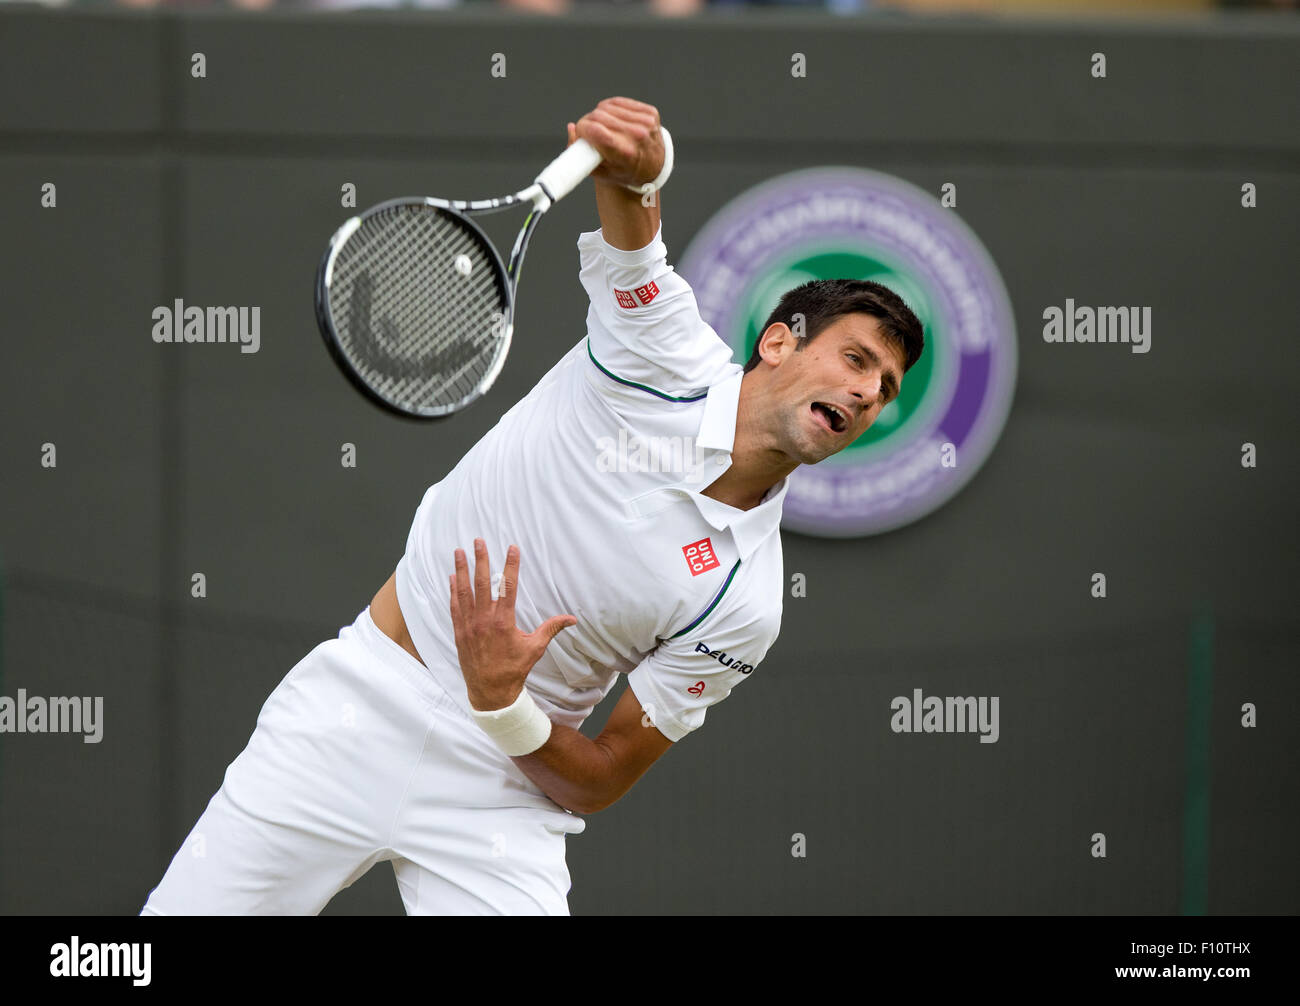 Novak Djokovic (SRB),de Wimbledon 2015, Londres, Angleterre. Banque D'Images